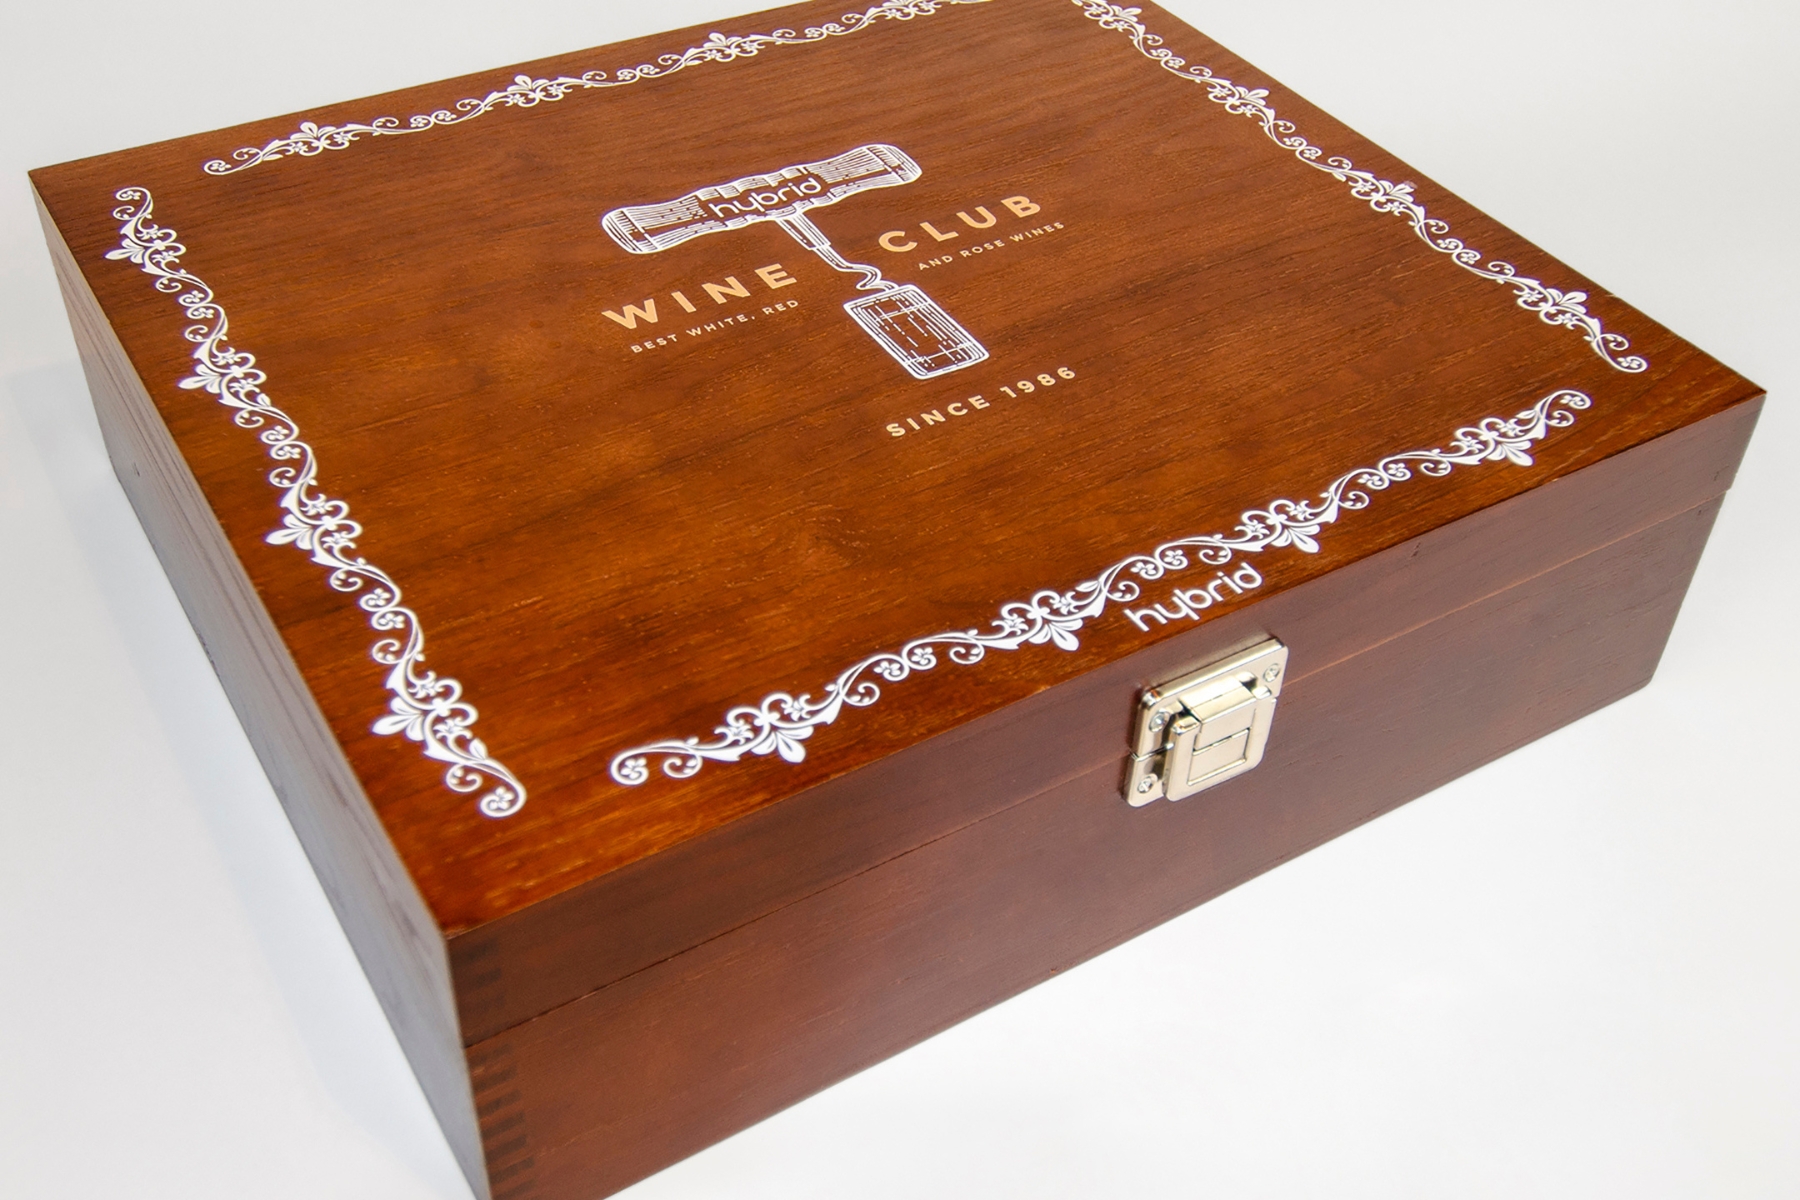 A wooden box printed with a Mimaki UV printer